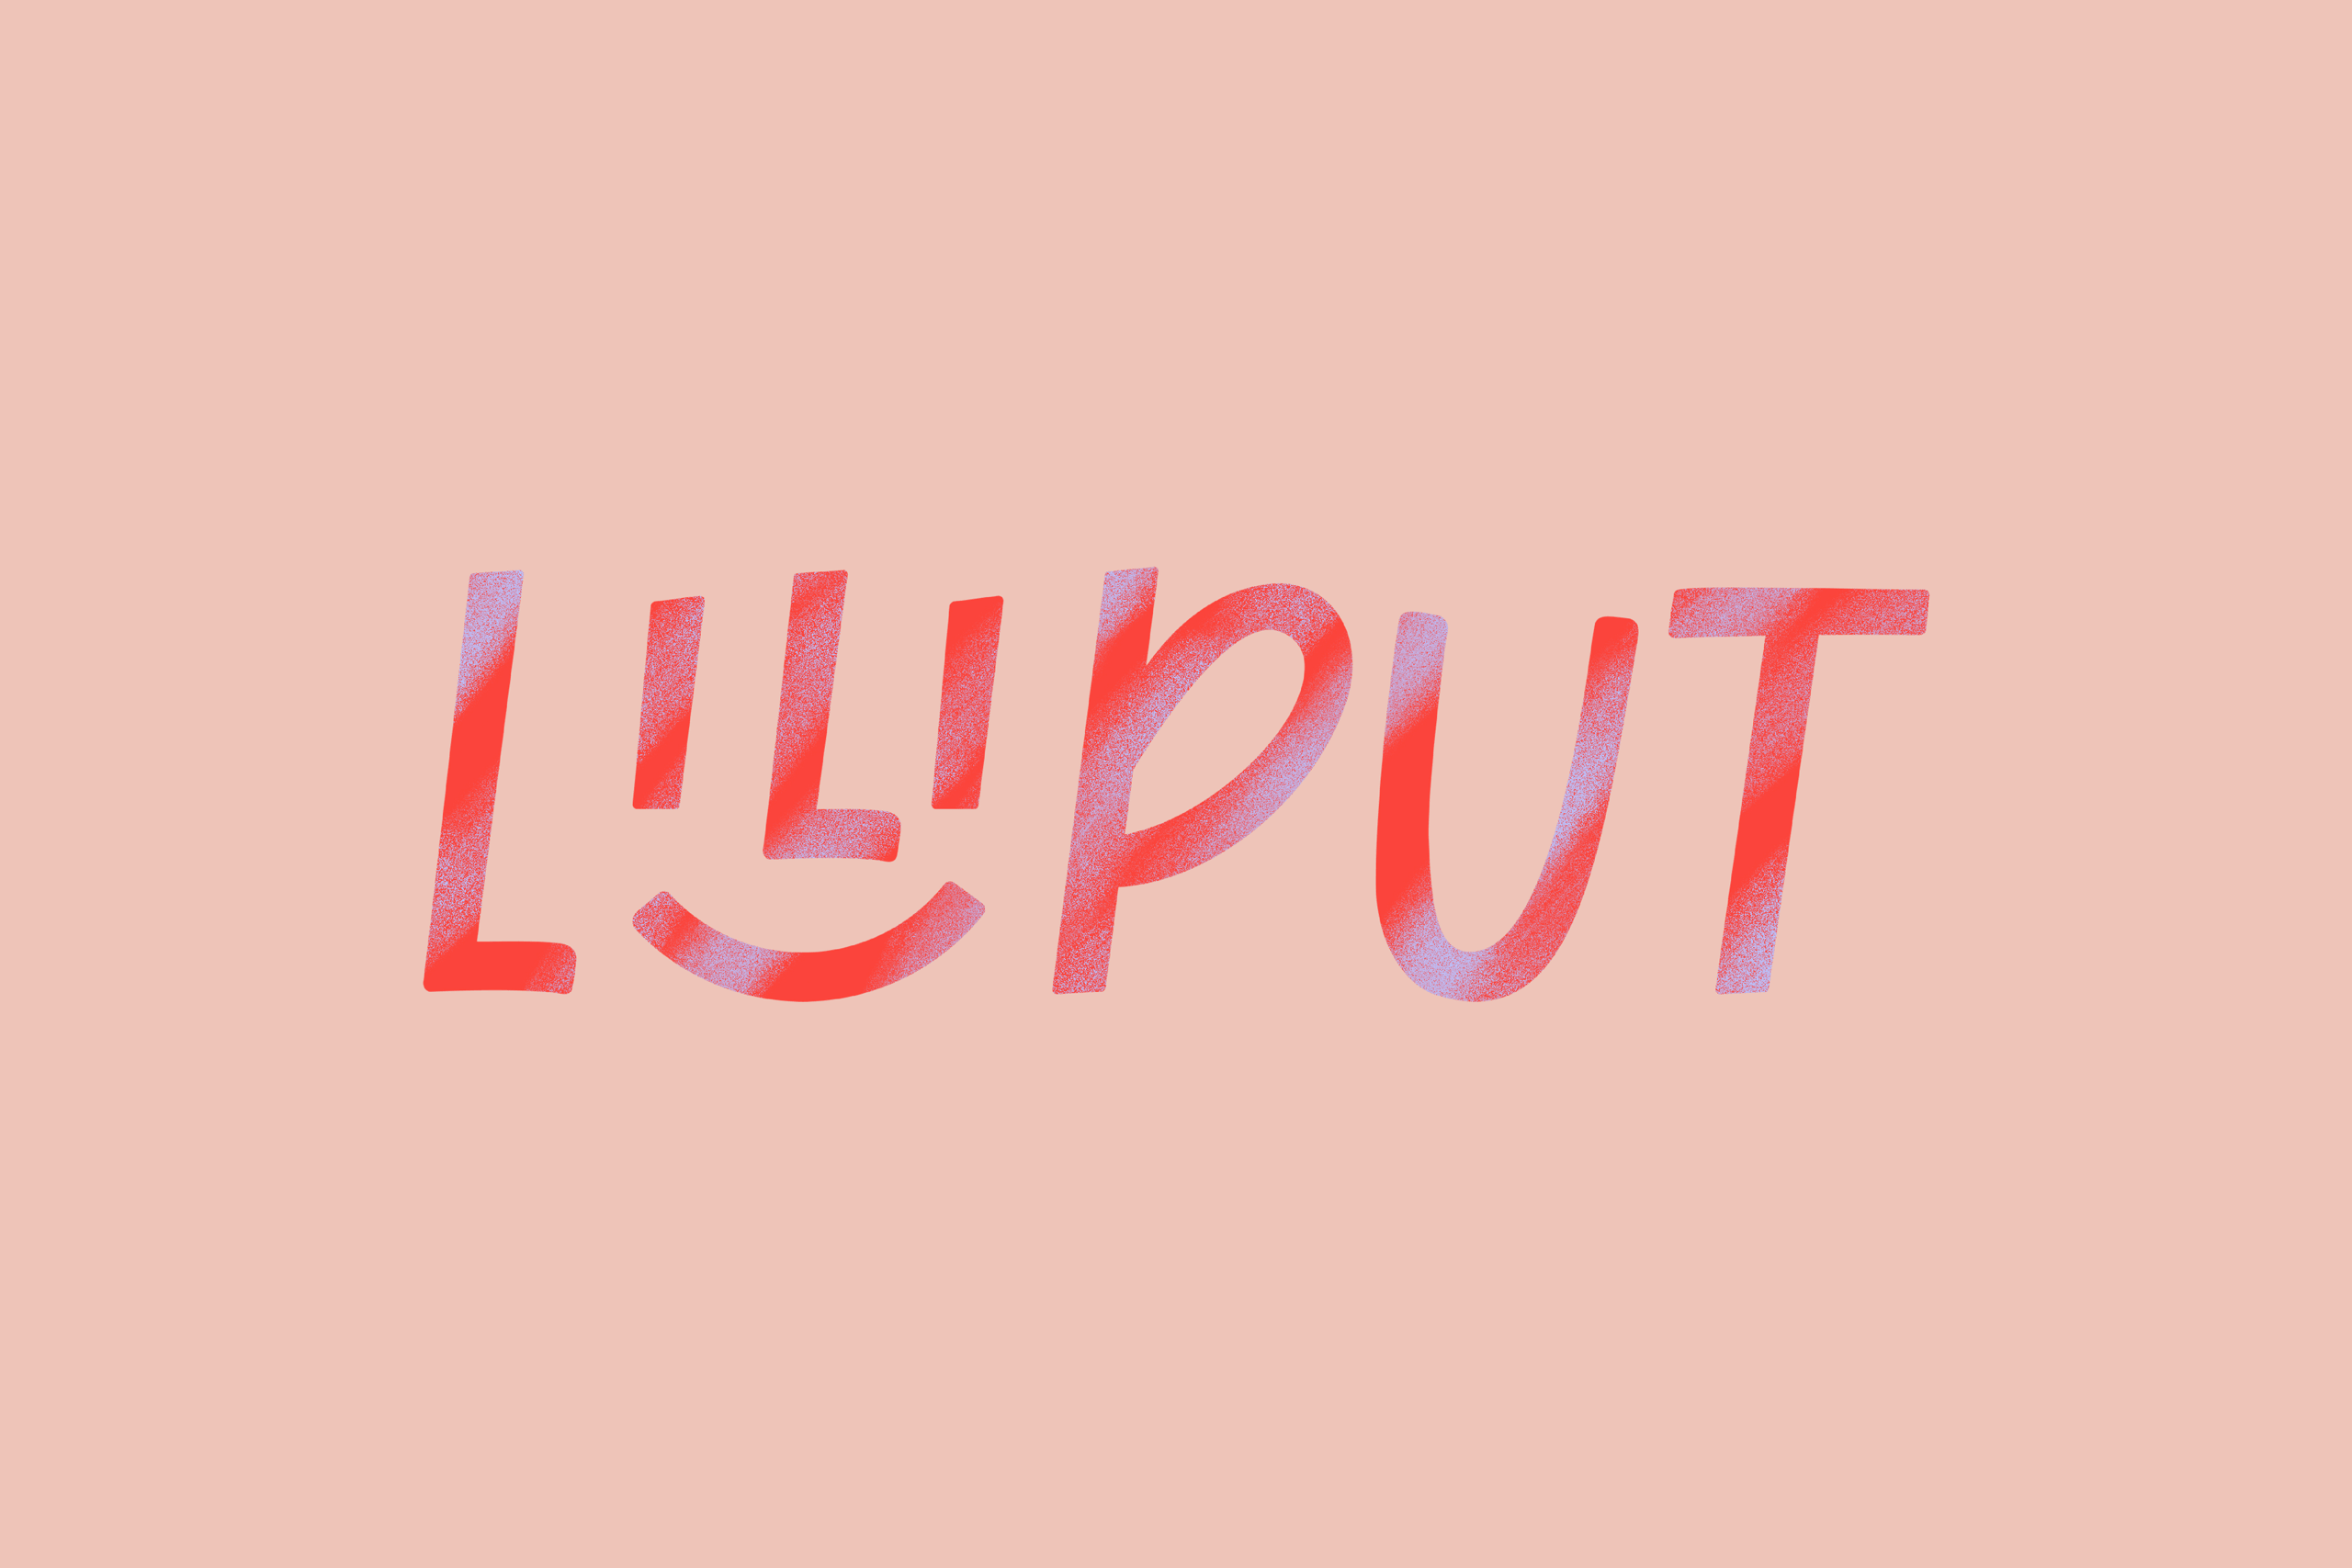 logo that says Liliput